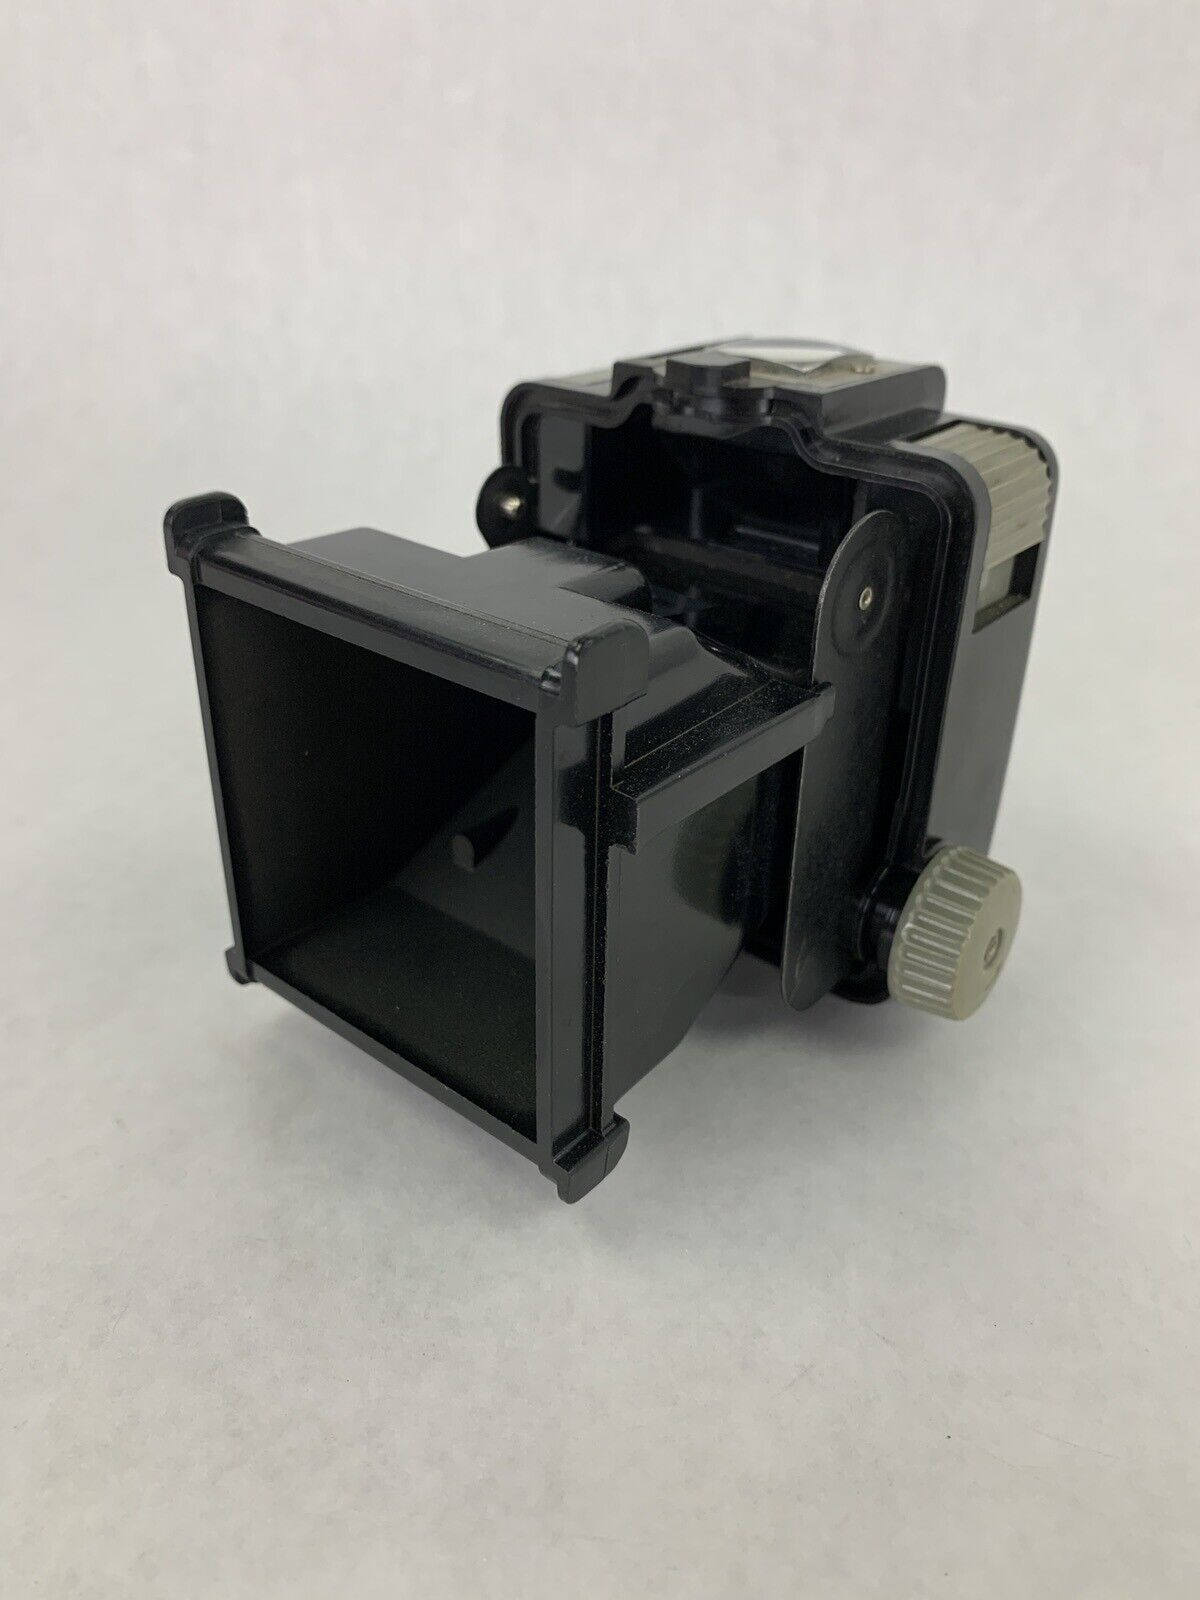 Vintage Kodak Brownie Hawkeye Box Camera Flash Model Working